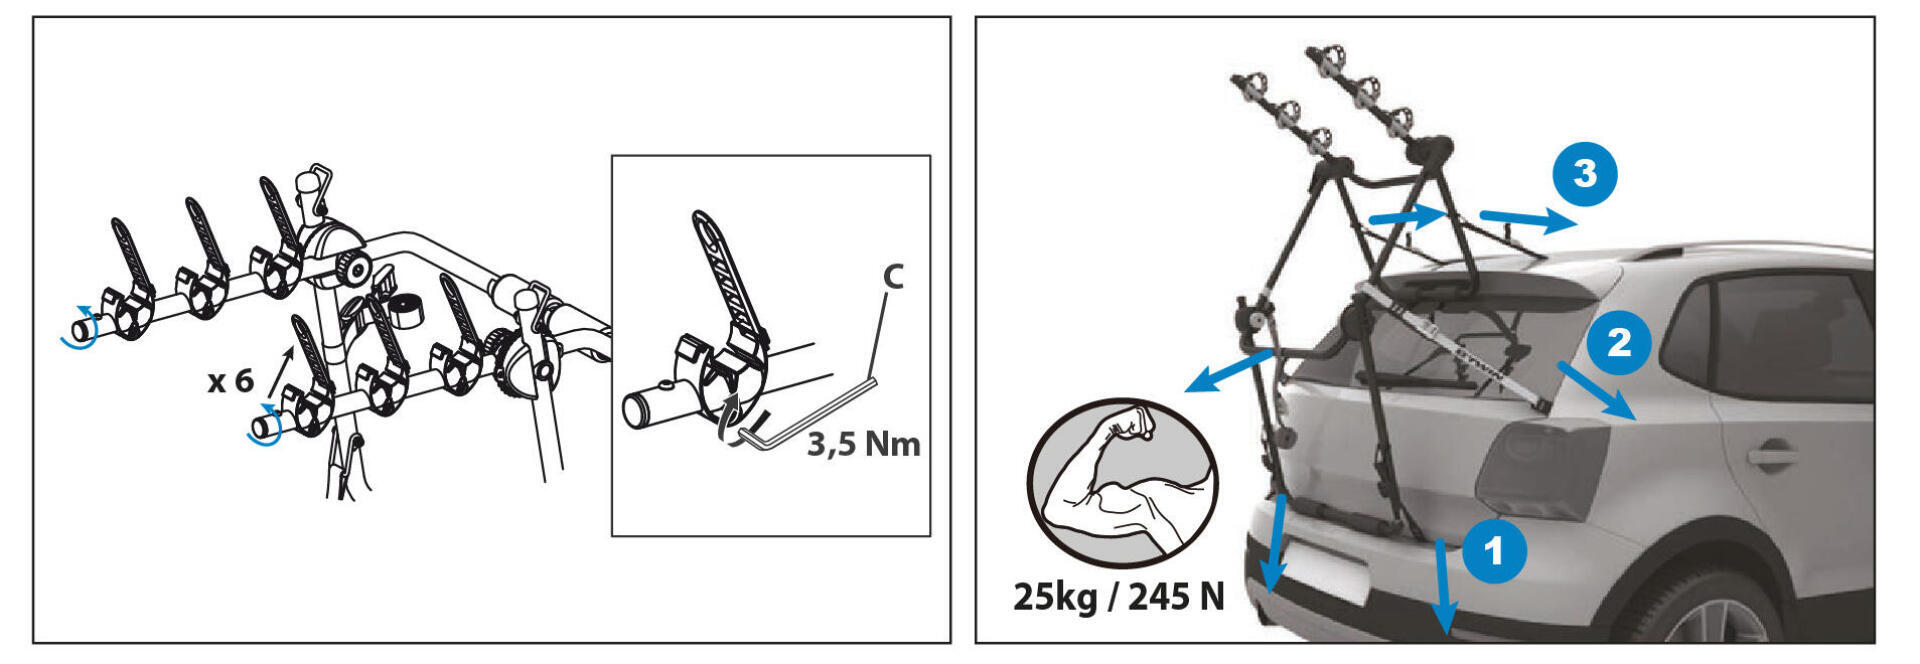 transporte bicicleta instrucciones portabicis 320 c1 Step05-6